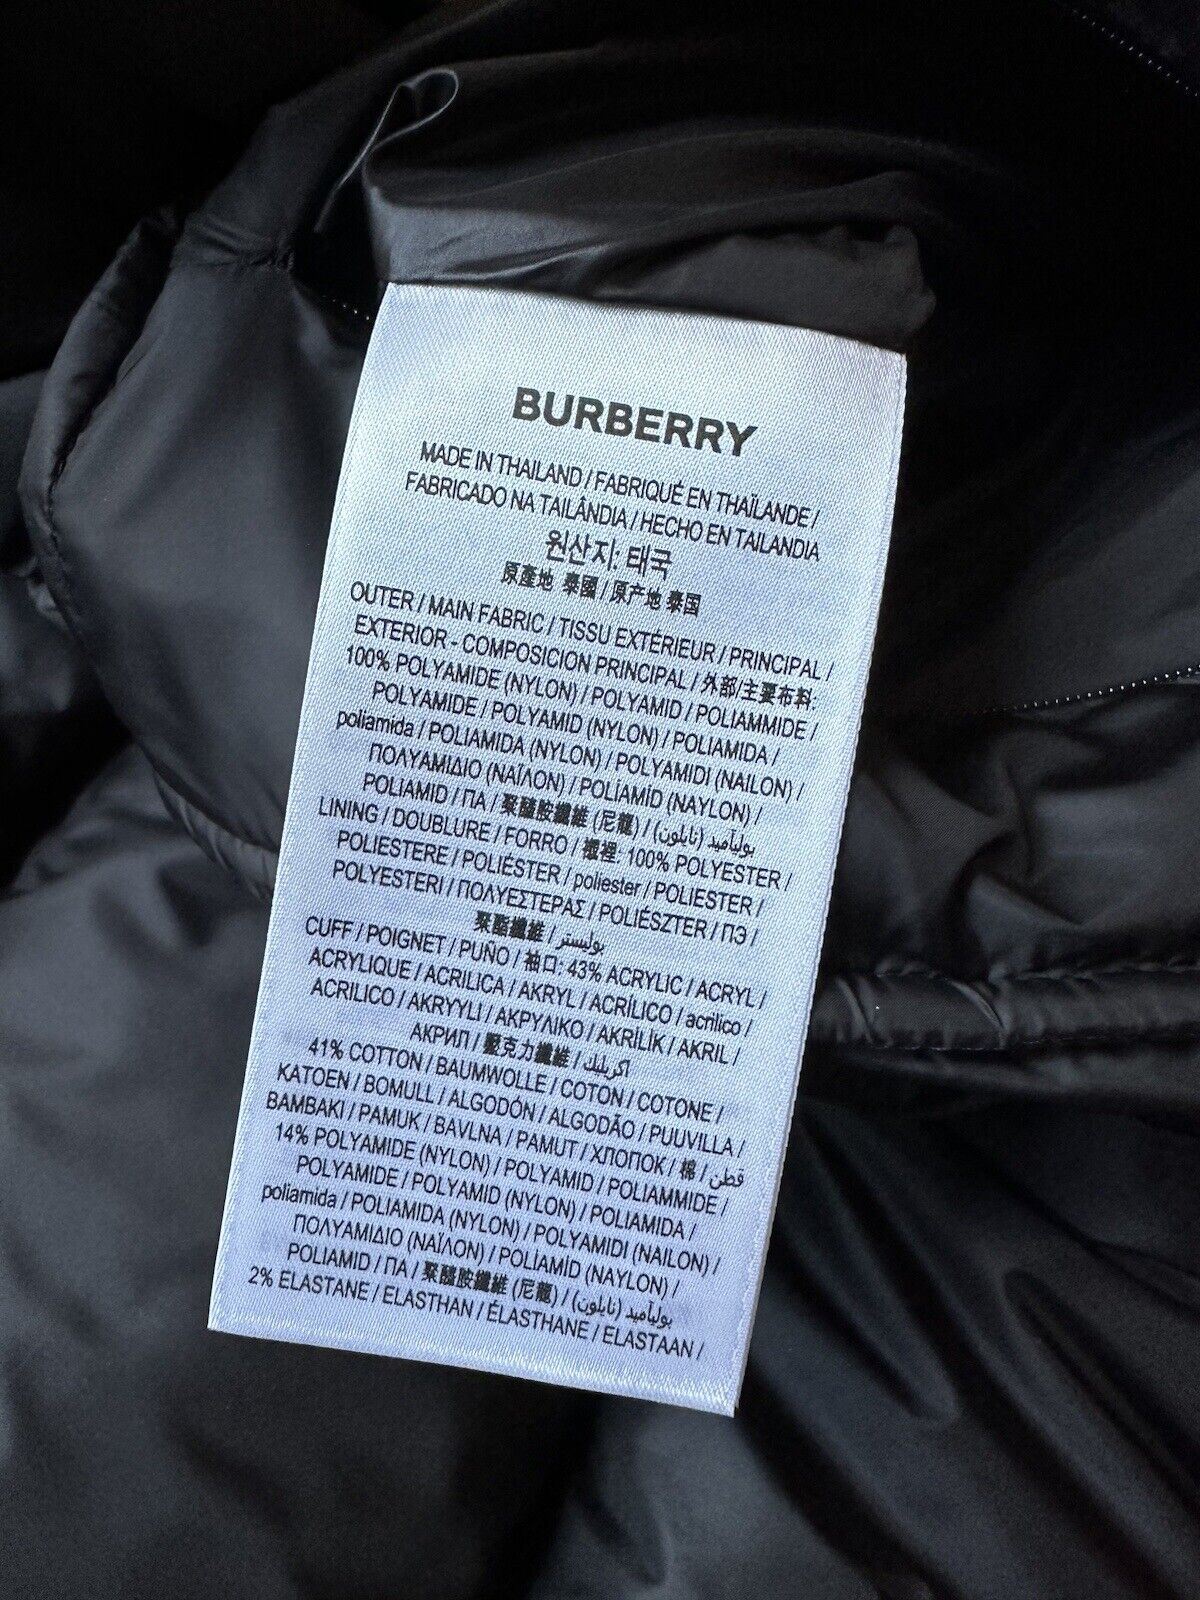 NWT $1350 Burberry London Women's Hooded Puffer Jacket Soft Fawn Medium 8061337